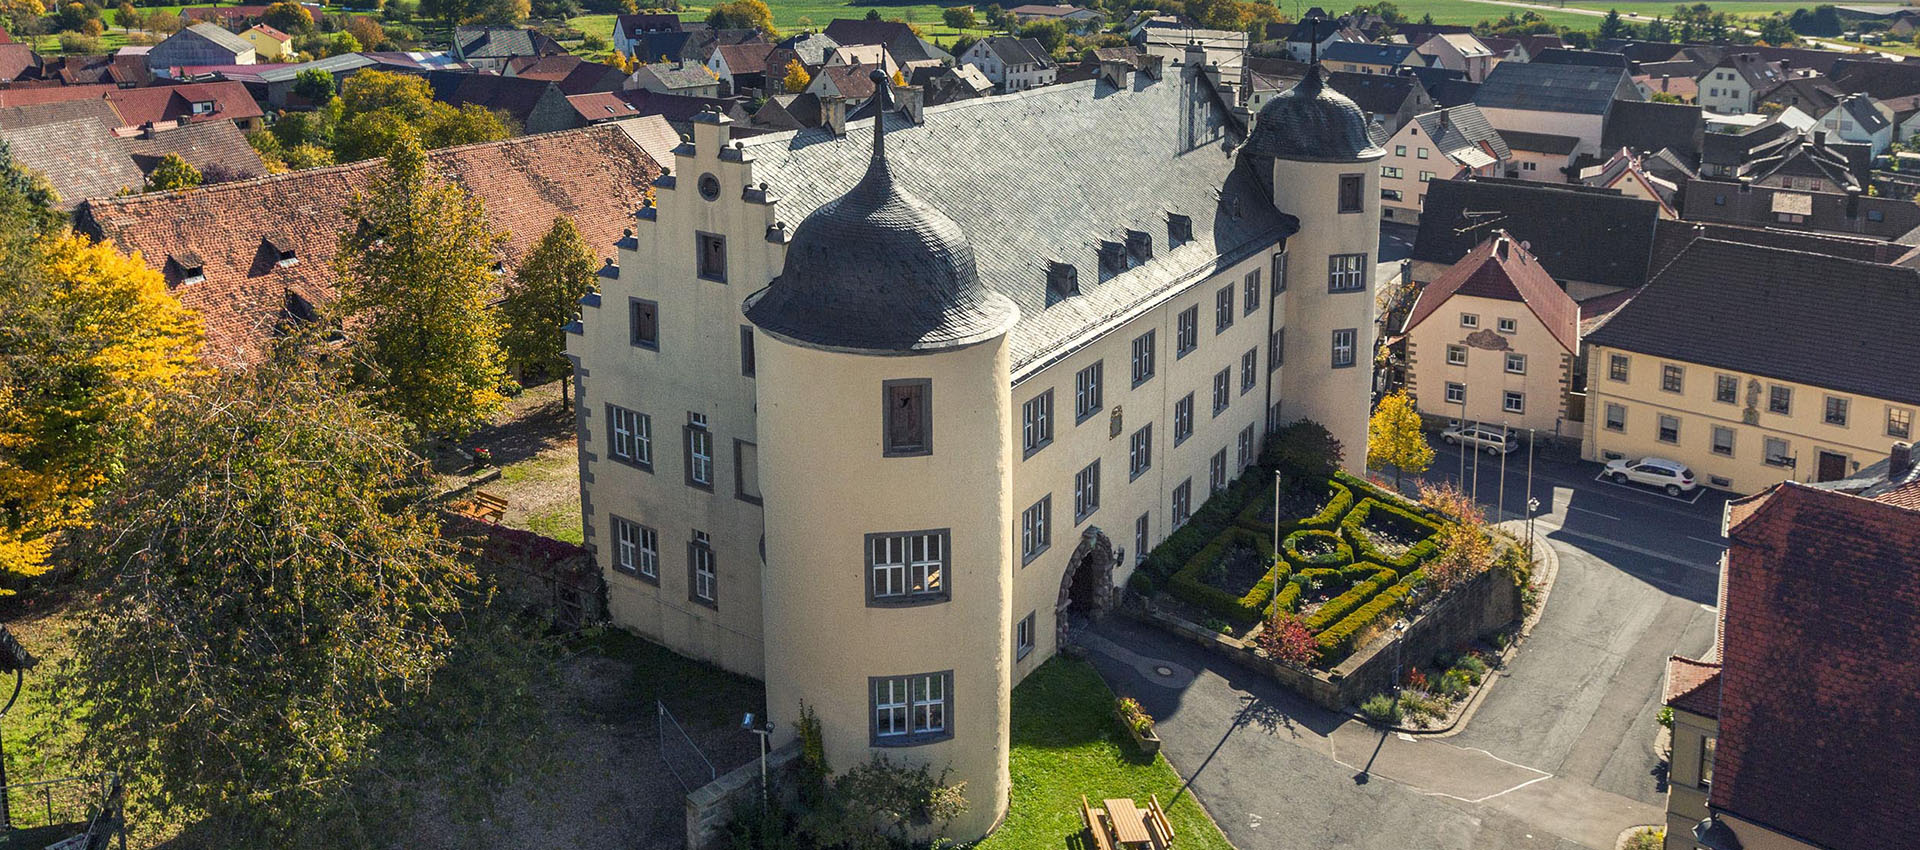 Blick von oben aufs Schloss Oberschwarzach